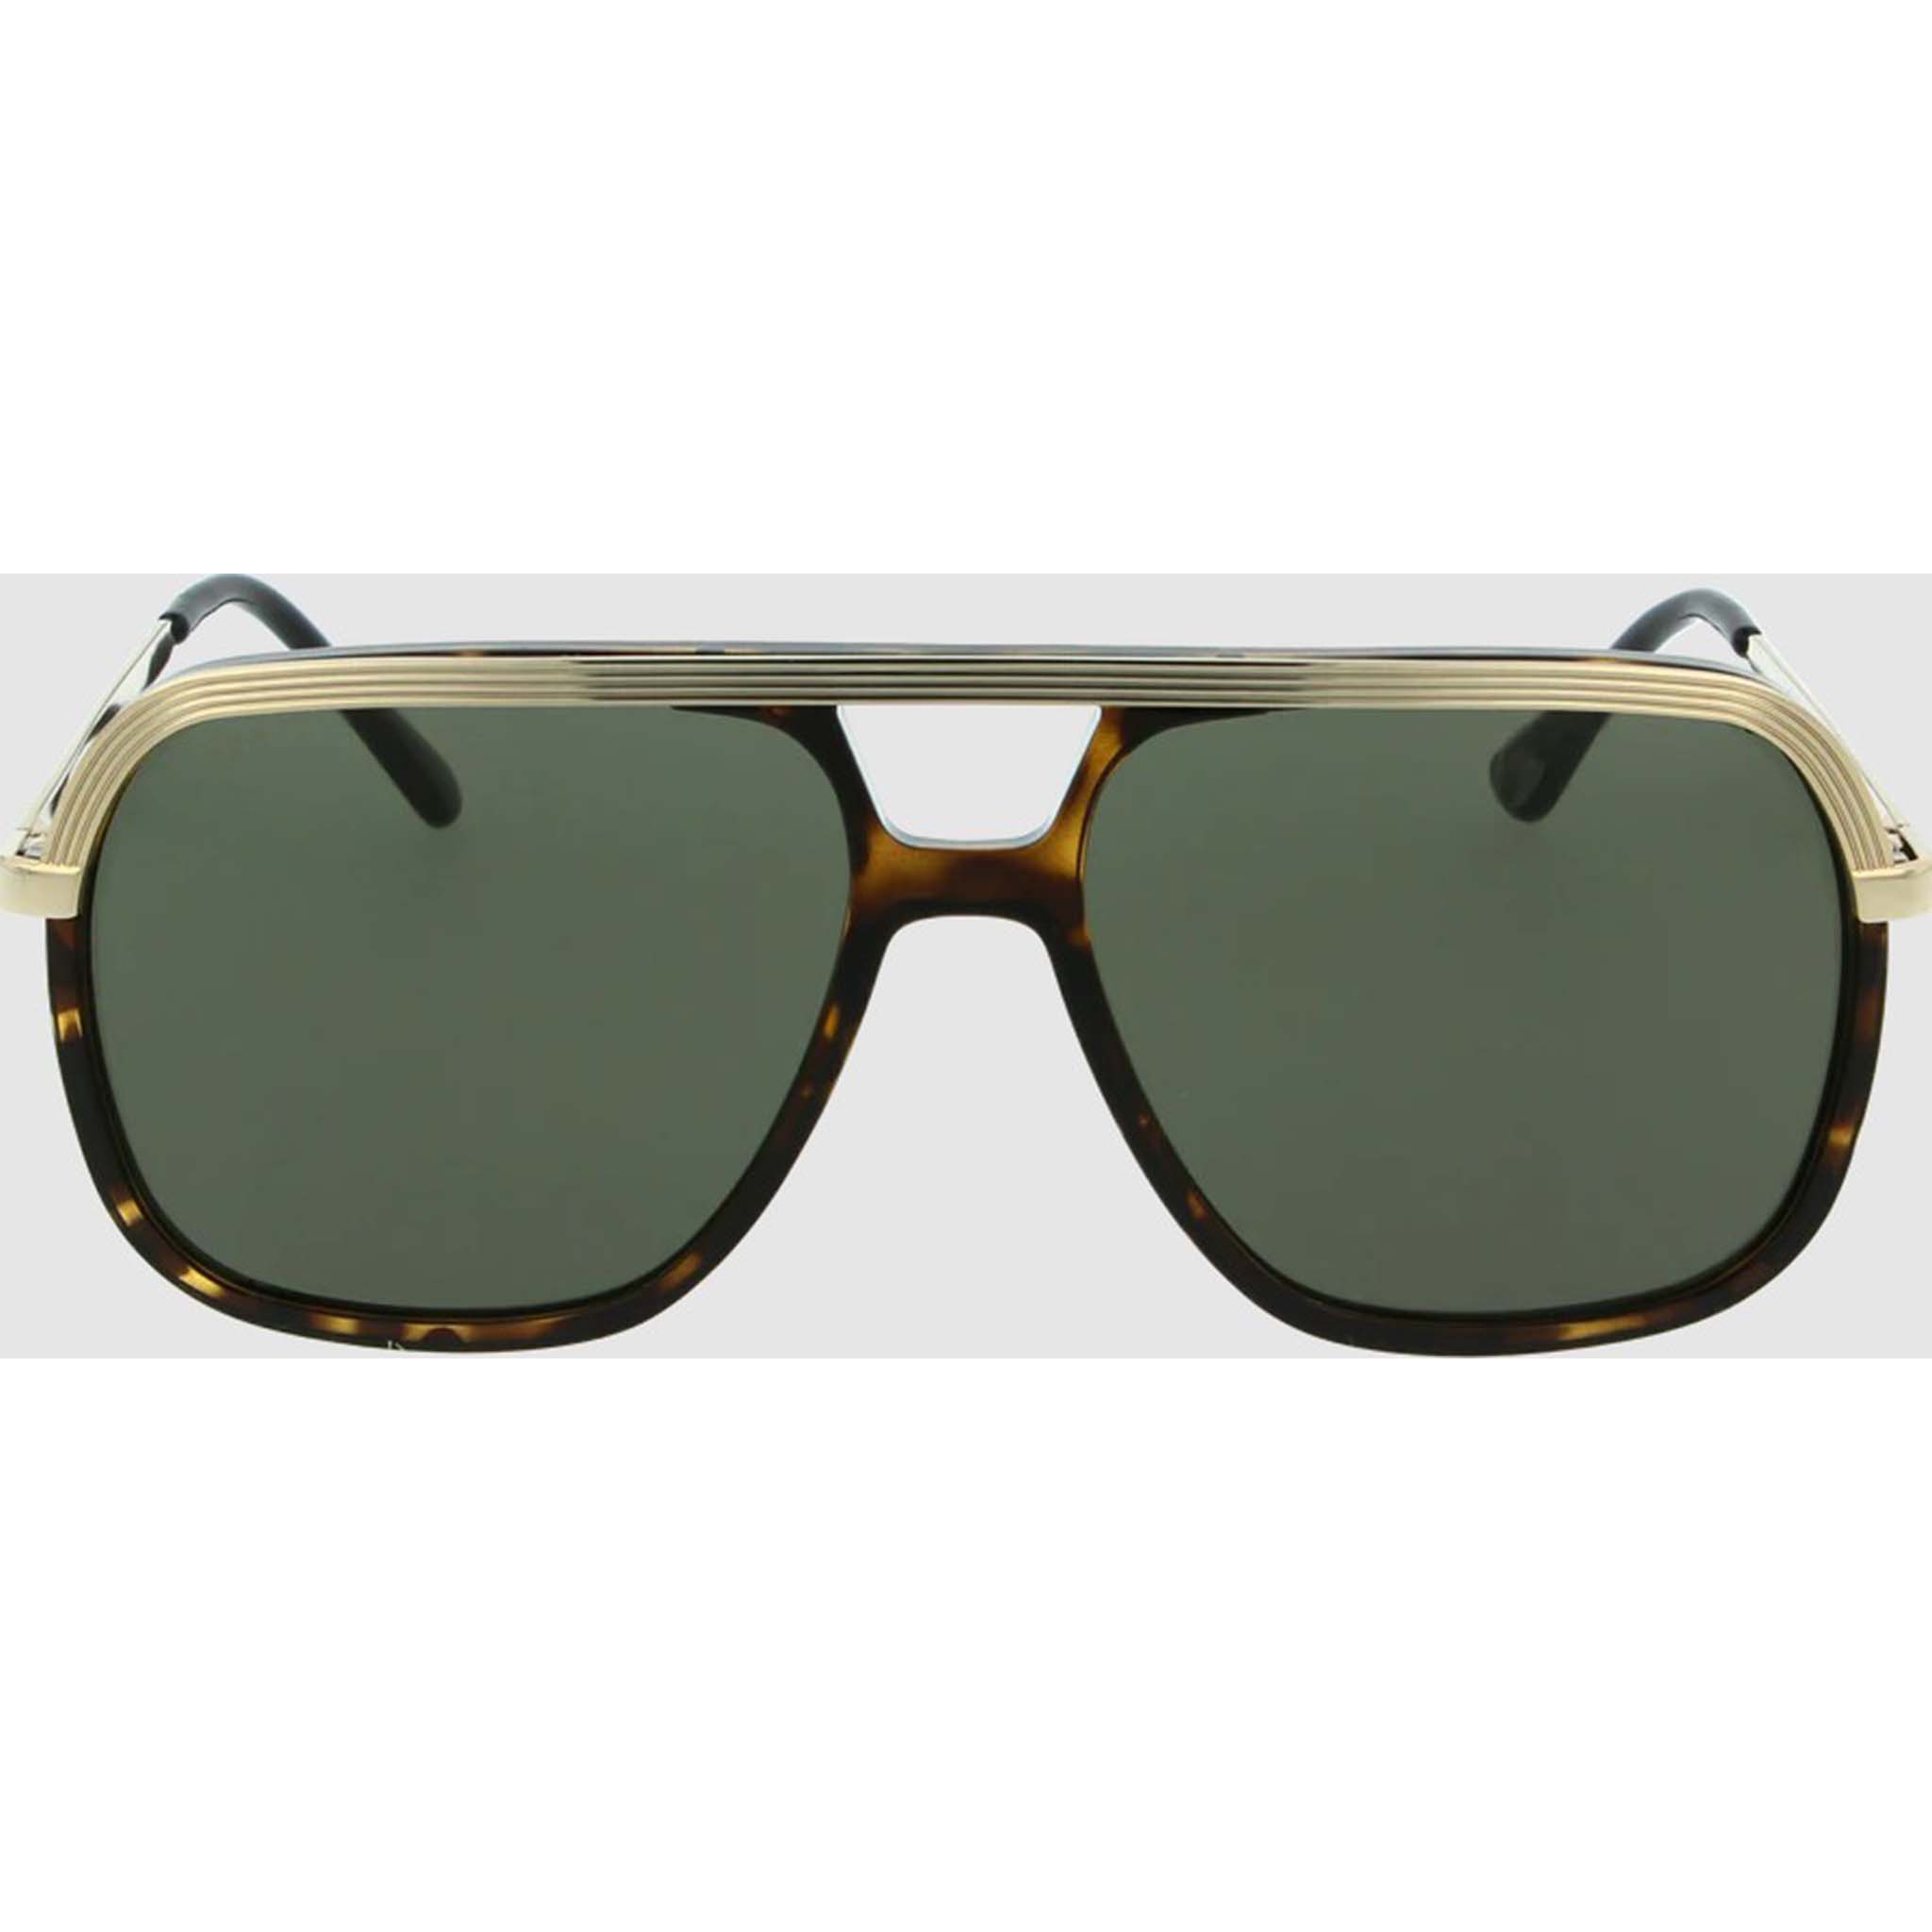 Ego Fashion Sunglasses DKFL7127